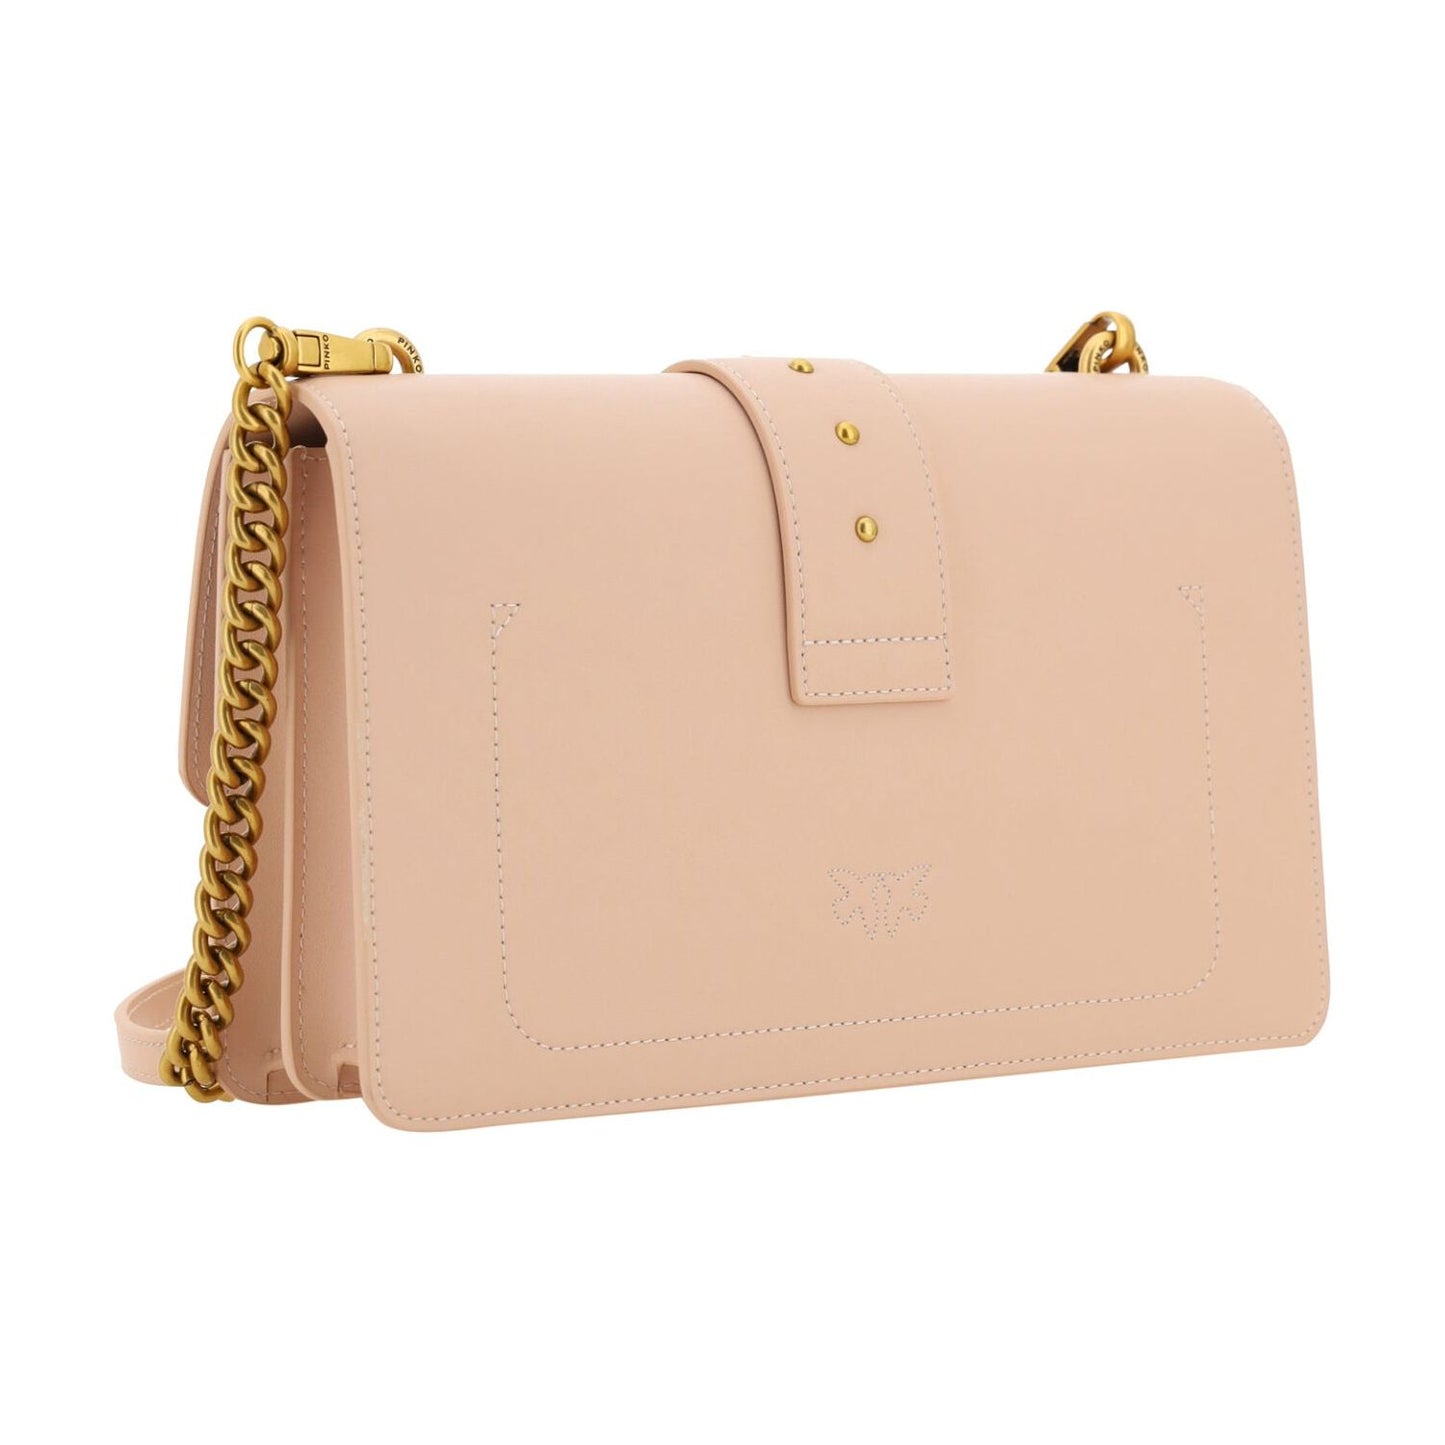 PINKO Chic Cipria Pink Classic Shoulder Bag pink-calf-leather-love-one-classic-shoulder-bag 4FCD8A12-5F3A-40B7-B5E2-2408FC8A9DF3-scaled-78954ae1-24d.jpg